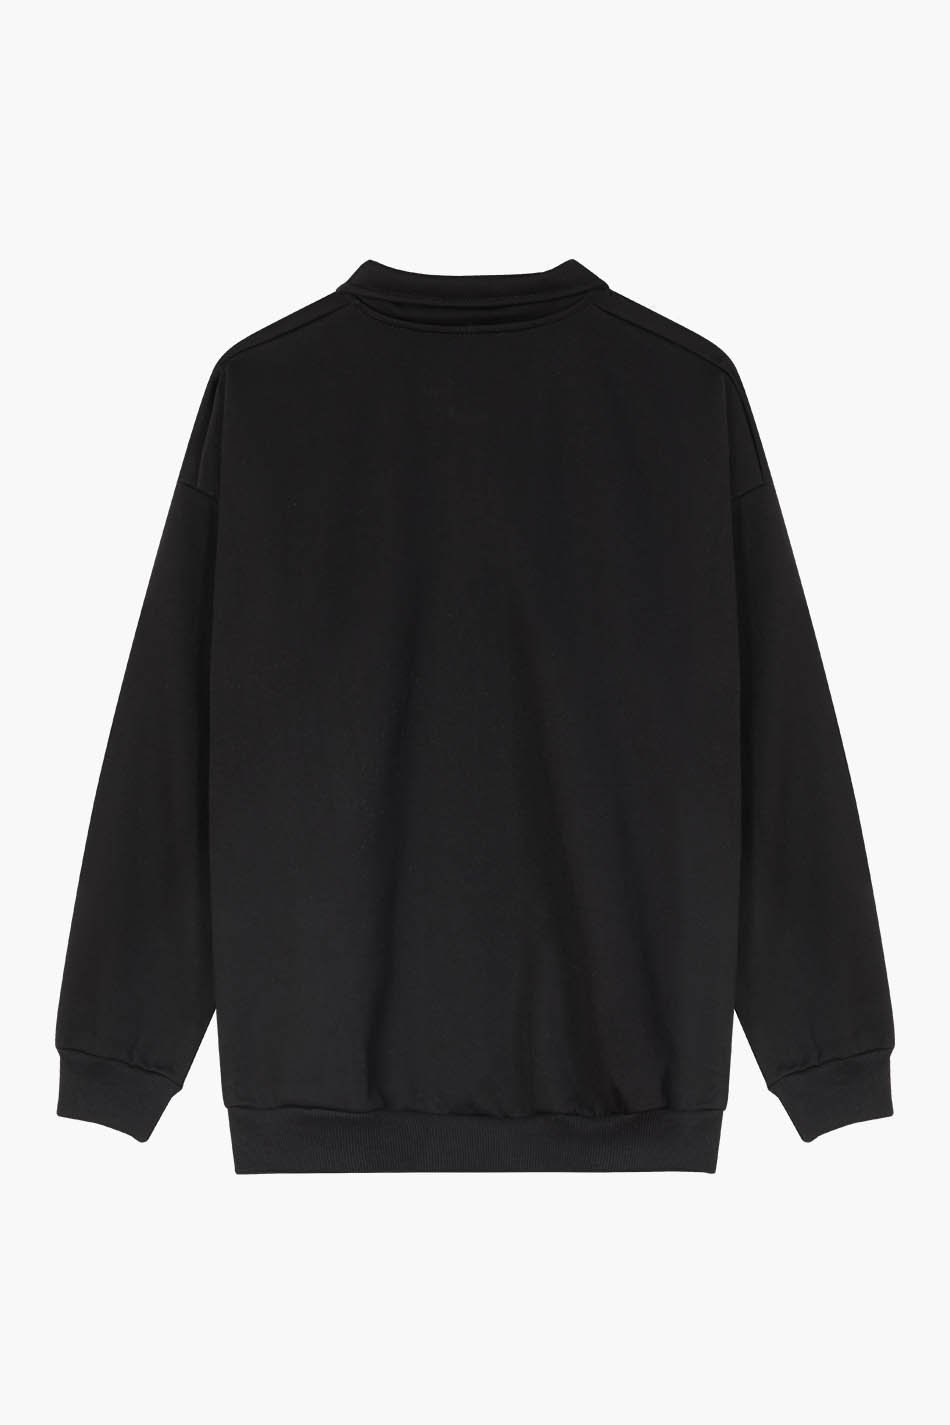 Black Pomeranian Sweatshirt